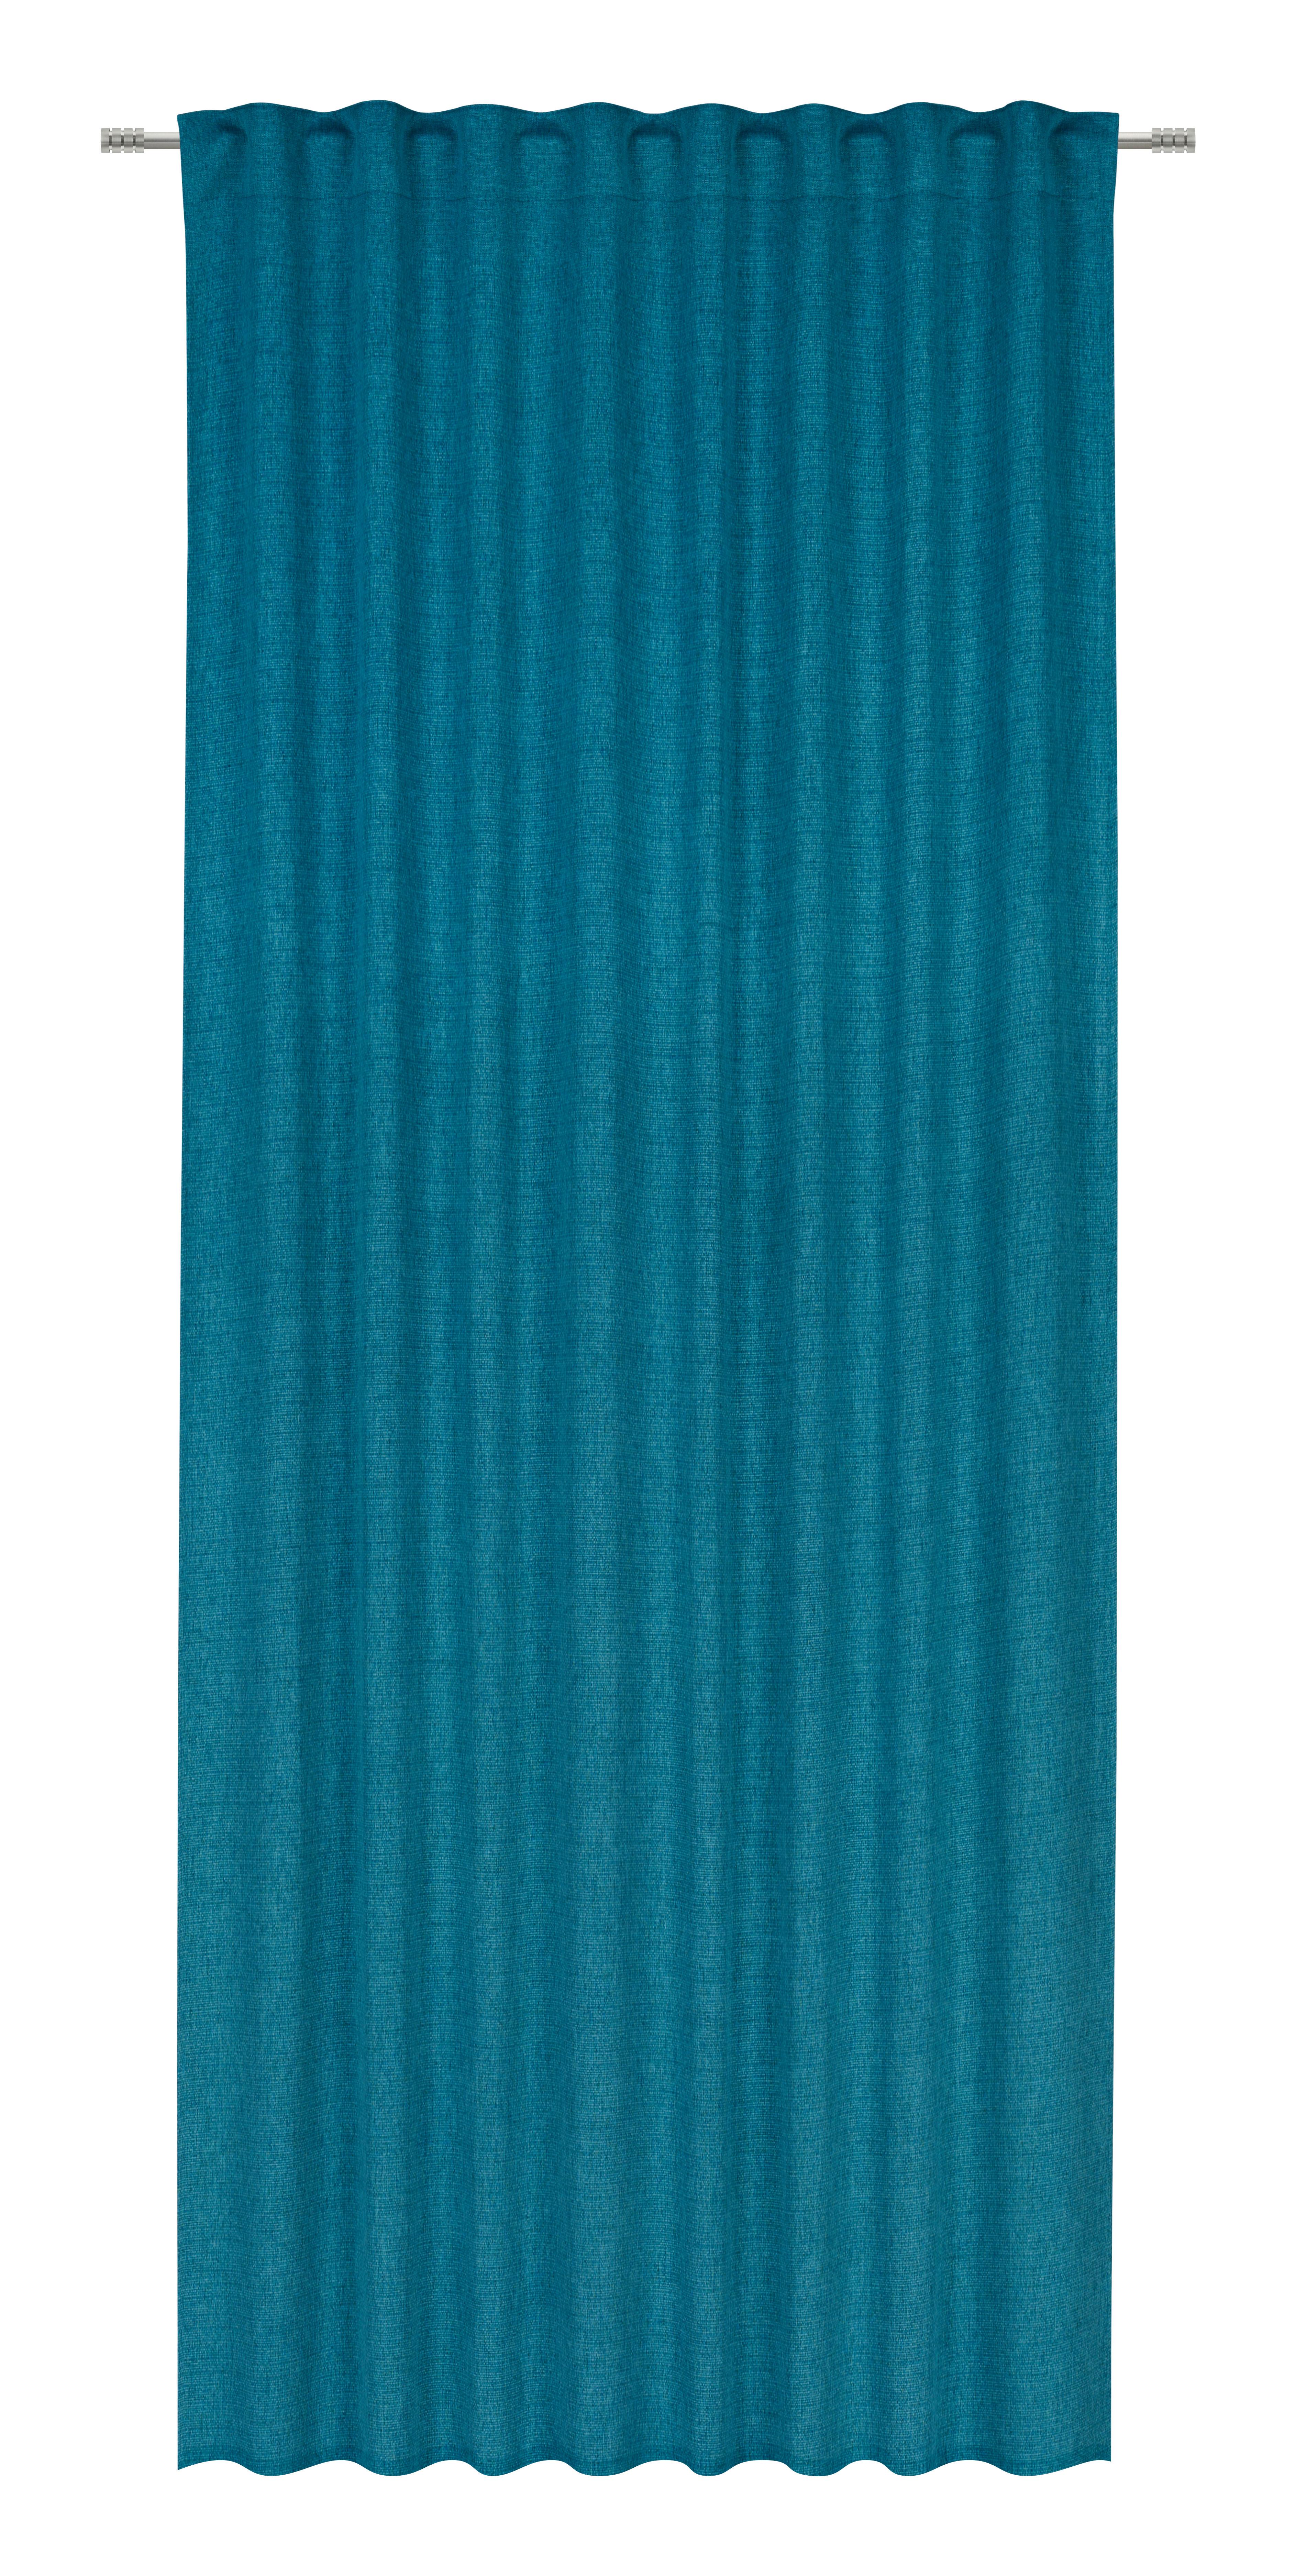 Verdunkelungsvorhang Anna - Petrol, ROMANTIK / LANDHAUS, Textil (135/245cm) - James Wood